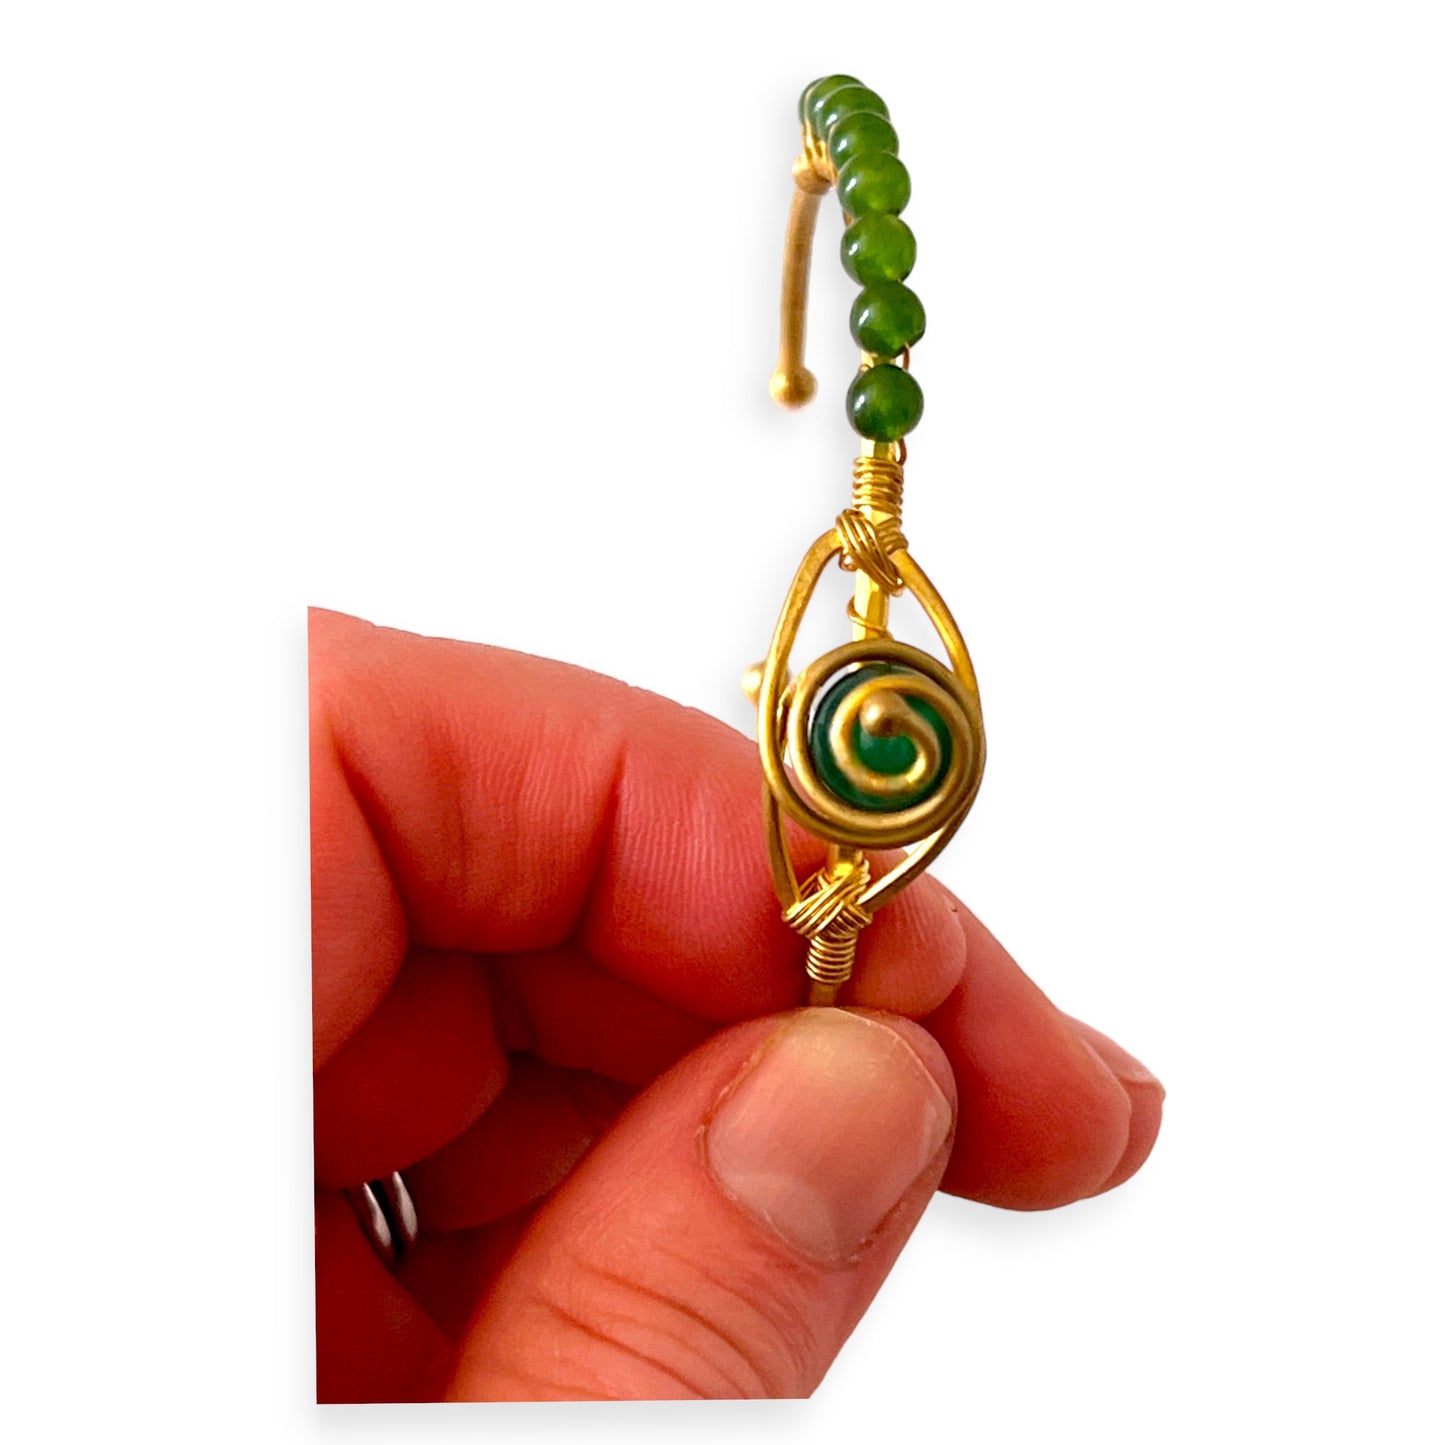 Woven cuff bracelet with beaded green gemstones - Sundara Joon